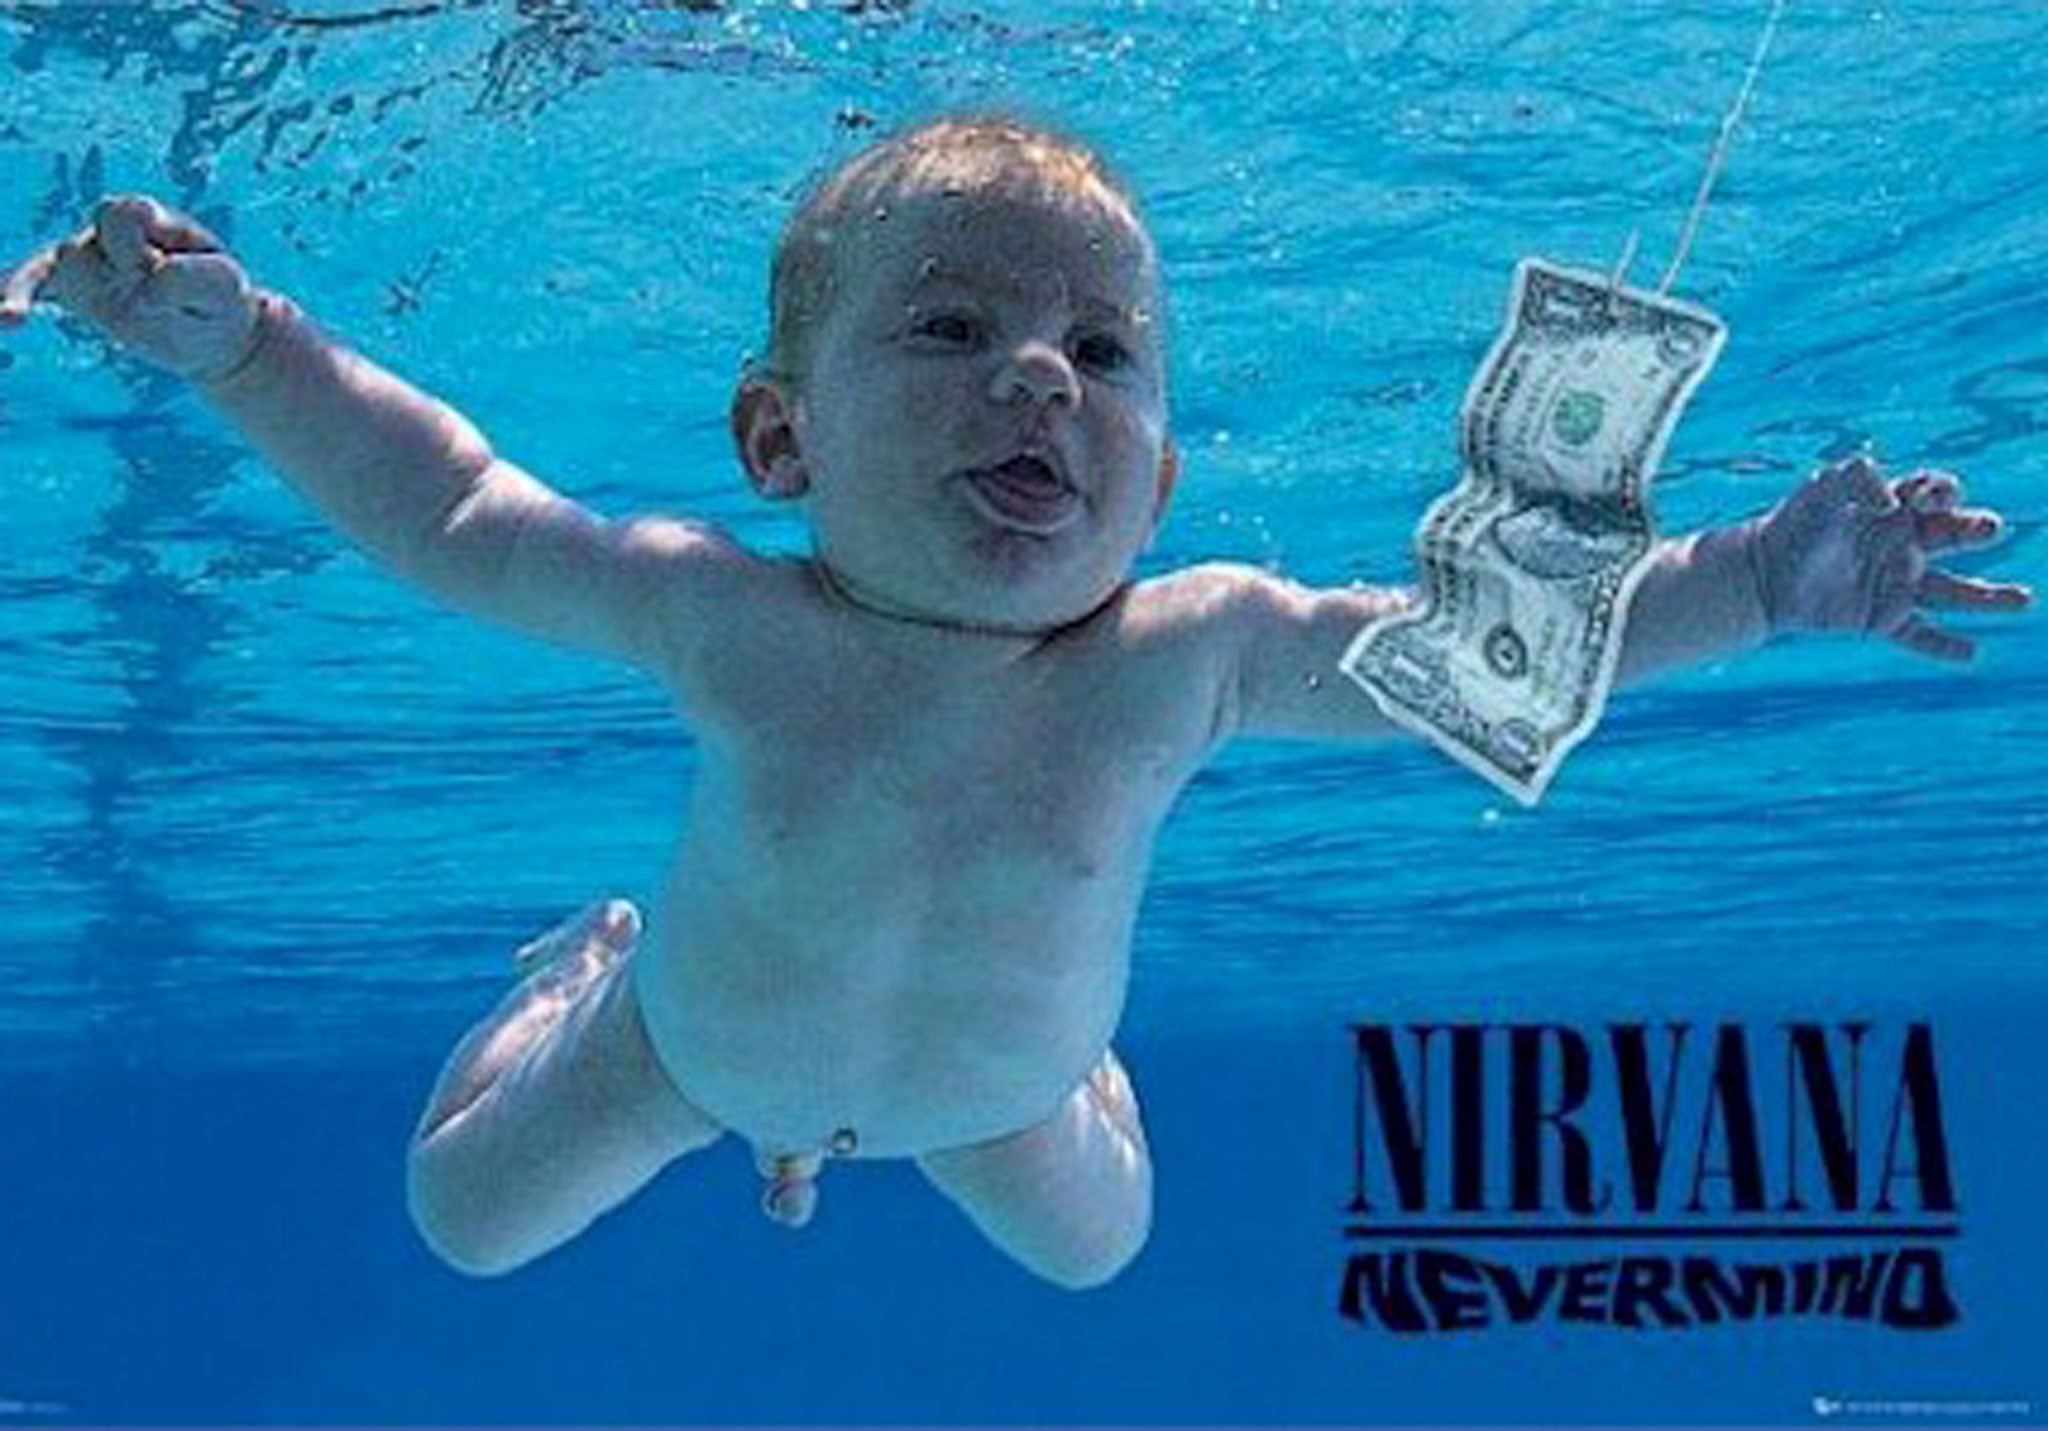 nirvana album